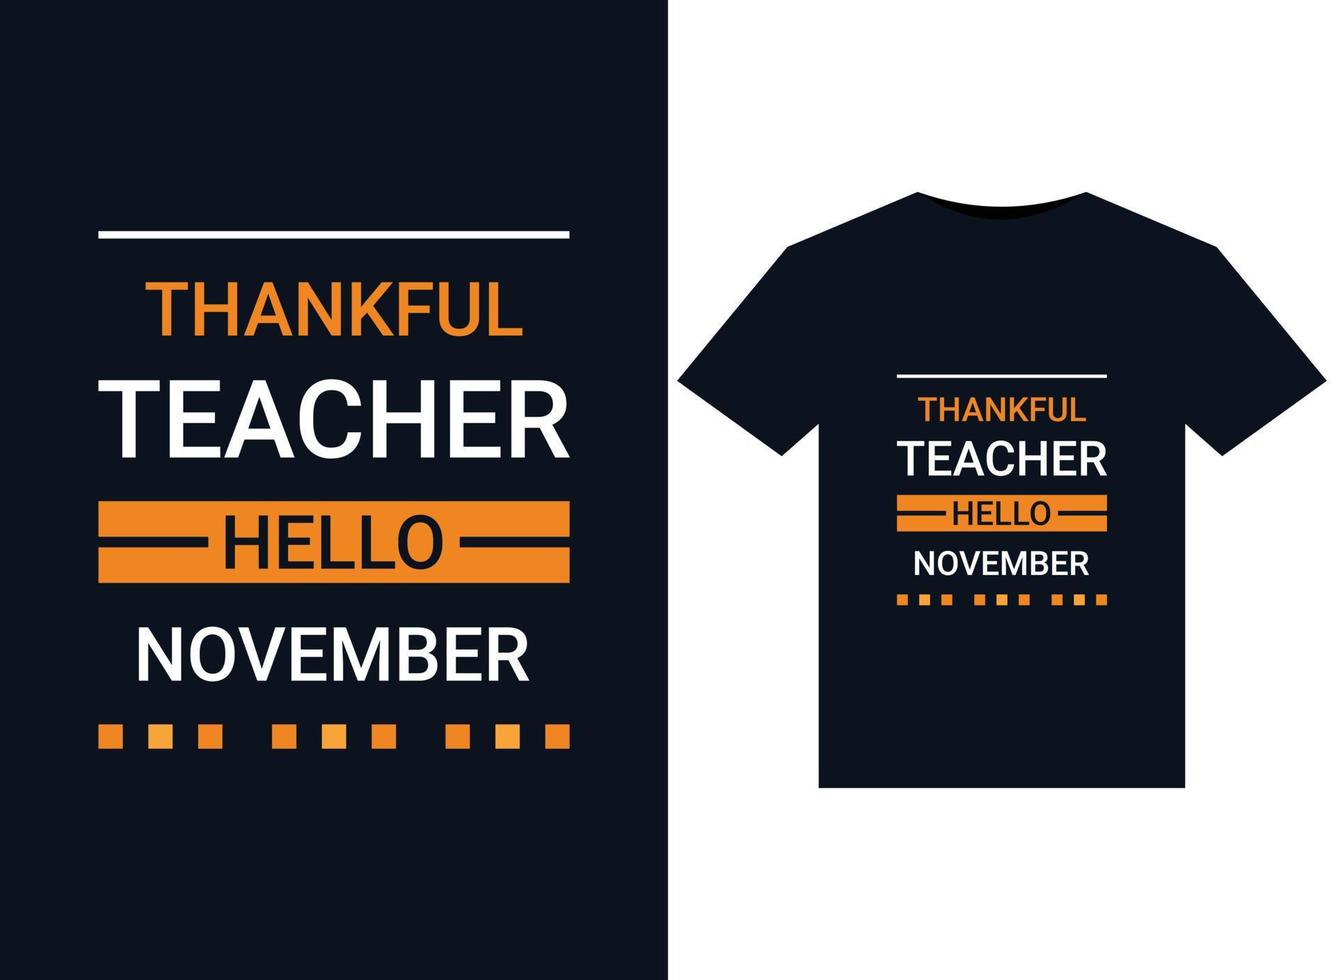 Thankful Teacher Hello November illustration for print-ready T-Shirts design vector